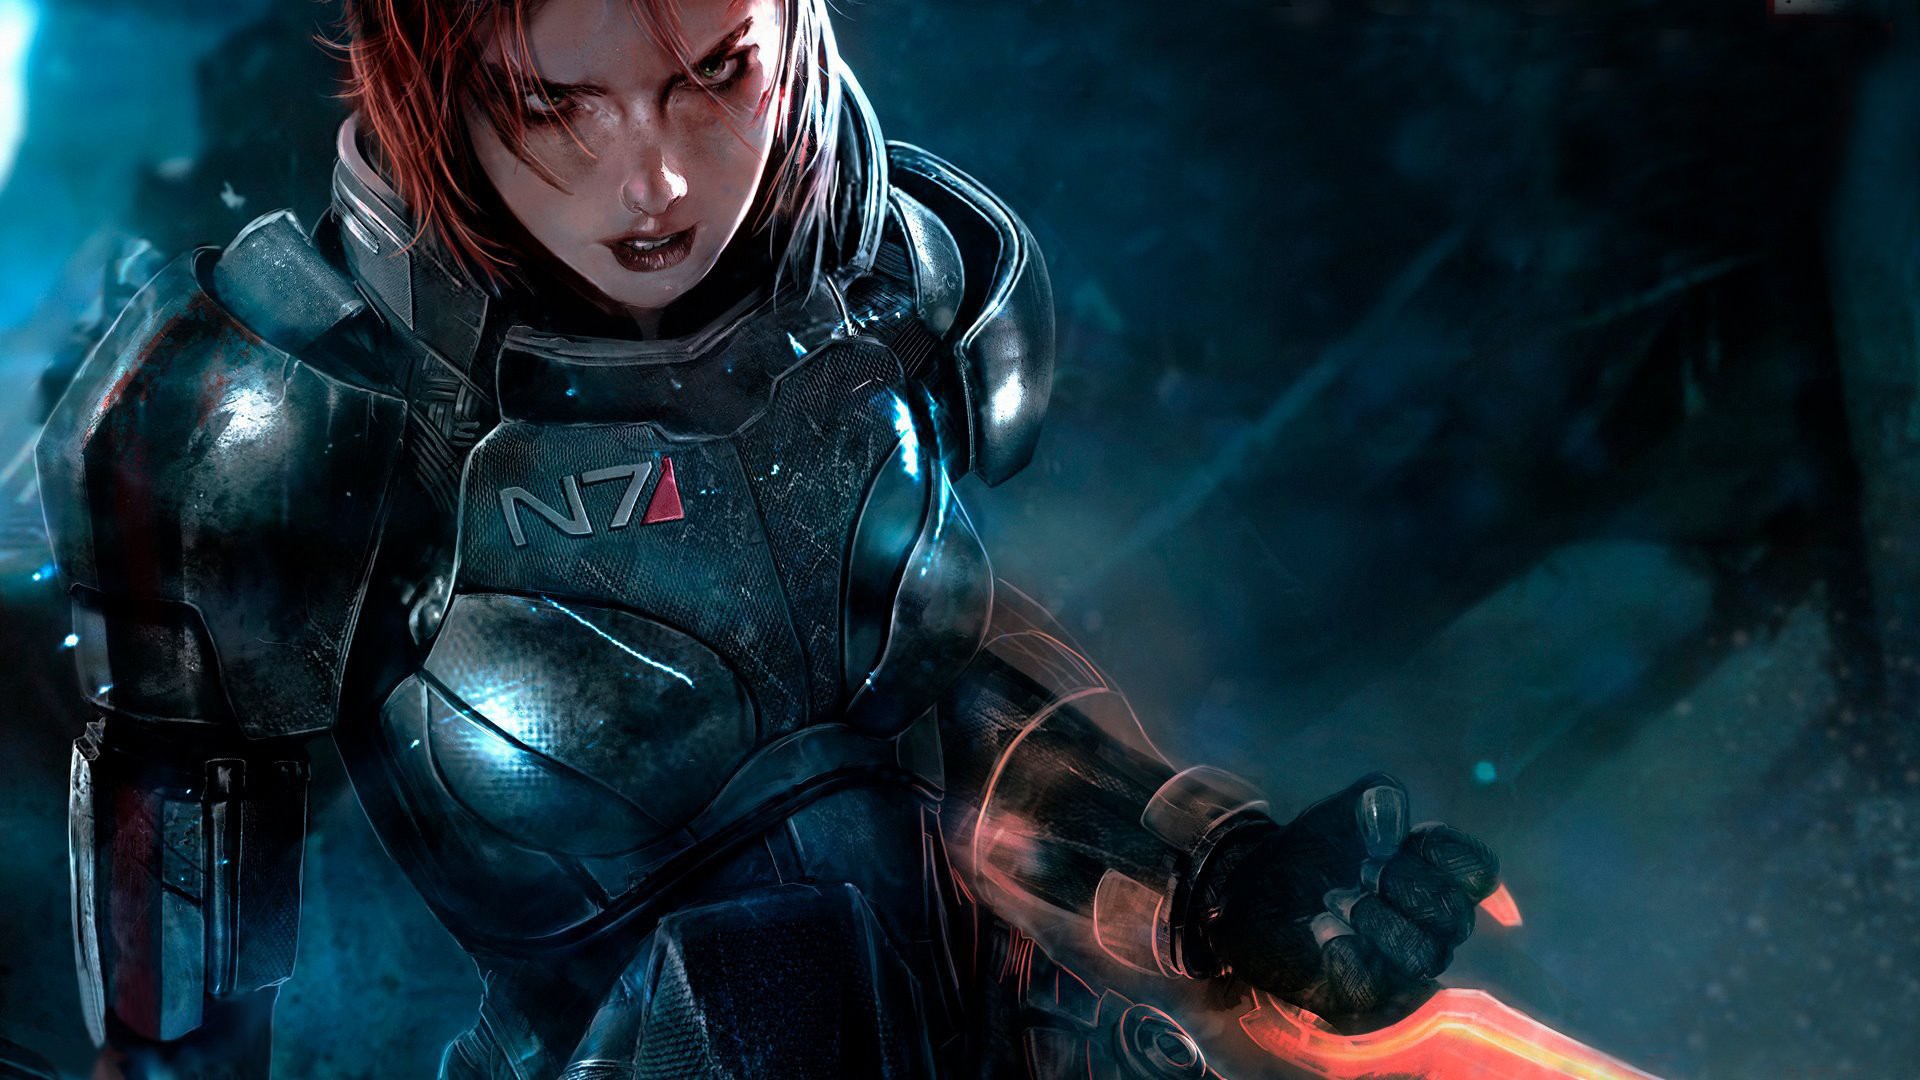 Mass Effect Commander Shepard Wallpapers Hd Desktop And Mobile Backgrounds 9552